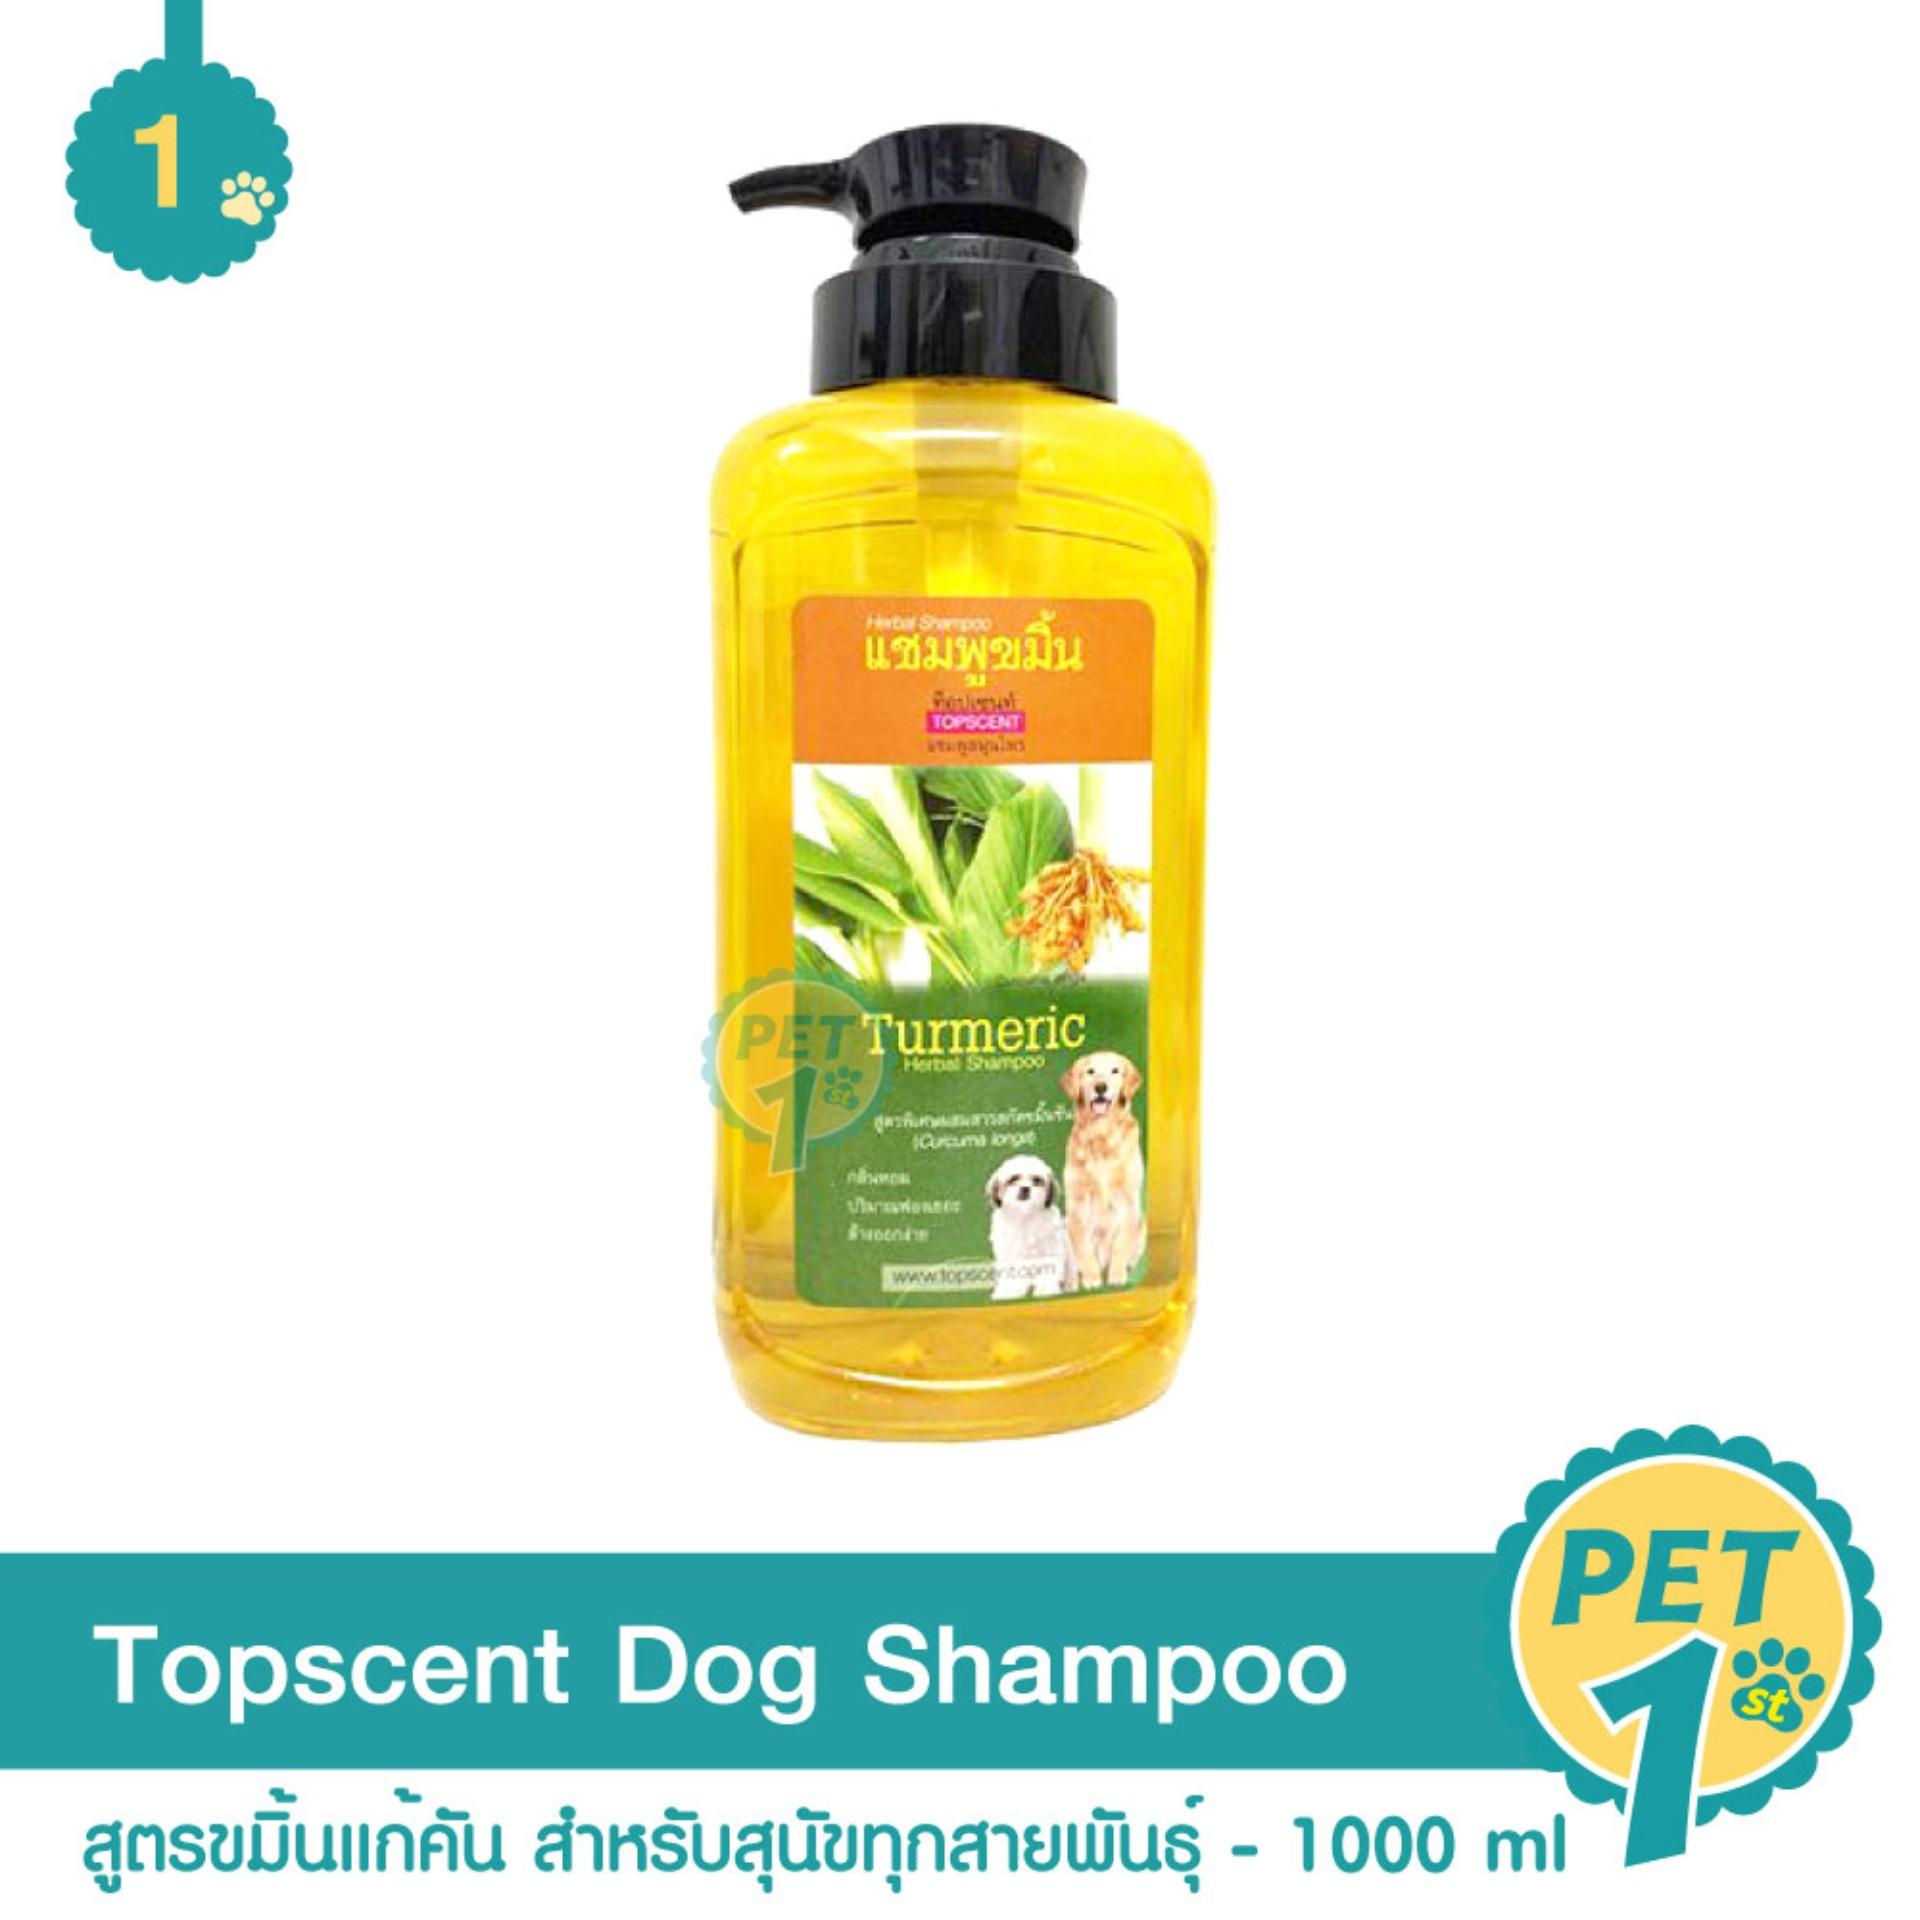 Topscent Dog Shampoo แชมพูสมุนไพร สูตรขมิ้นแก้คัน สำหรับสุนัขทุกสายพันธุ์ ขนาด 1000 มล.